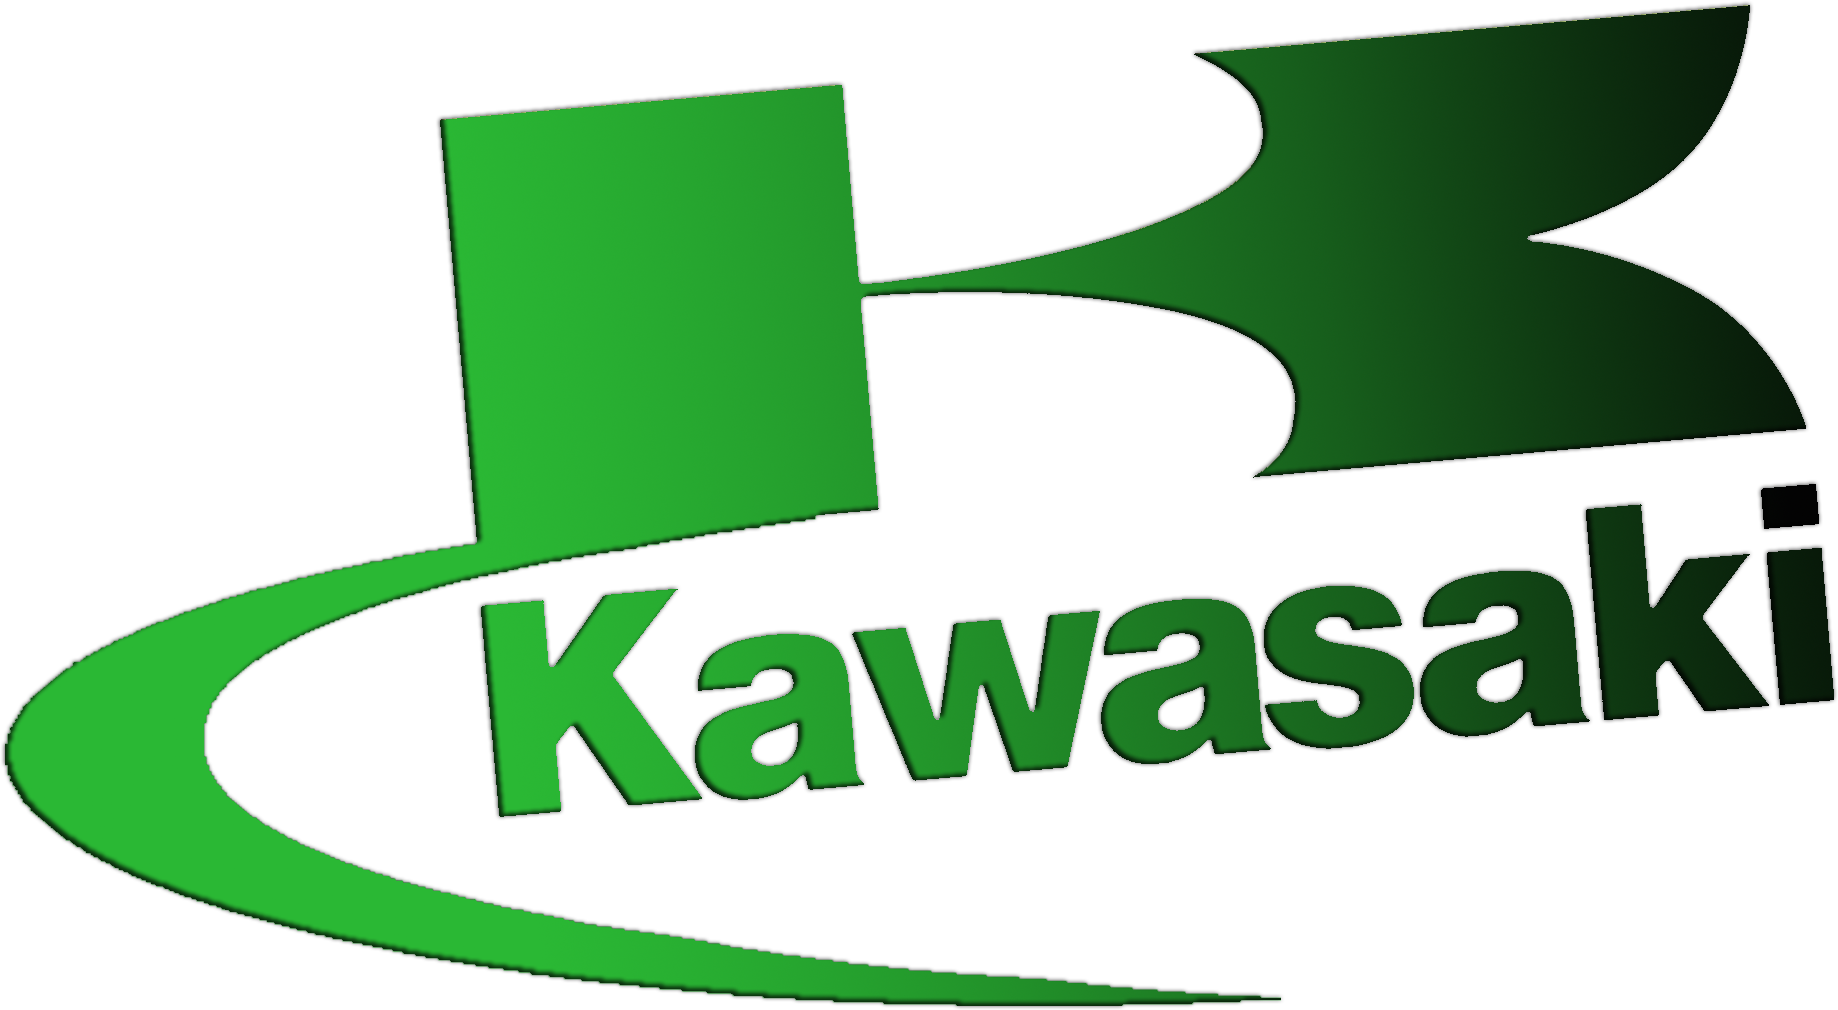 Kawasaki Logo PNG Image Background